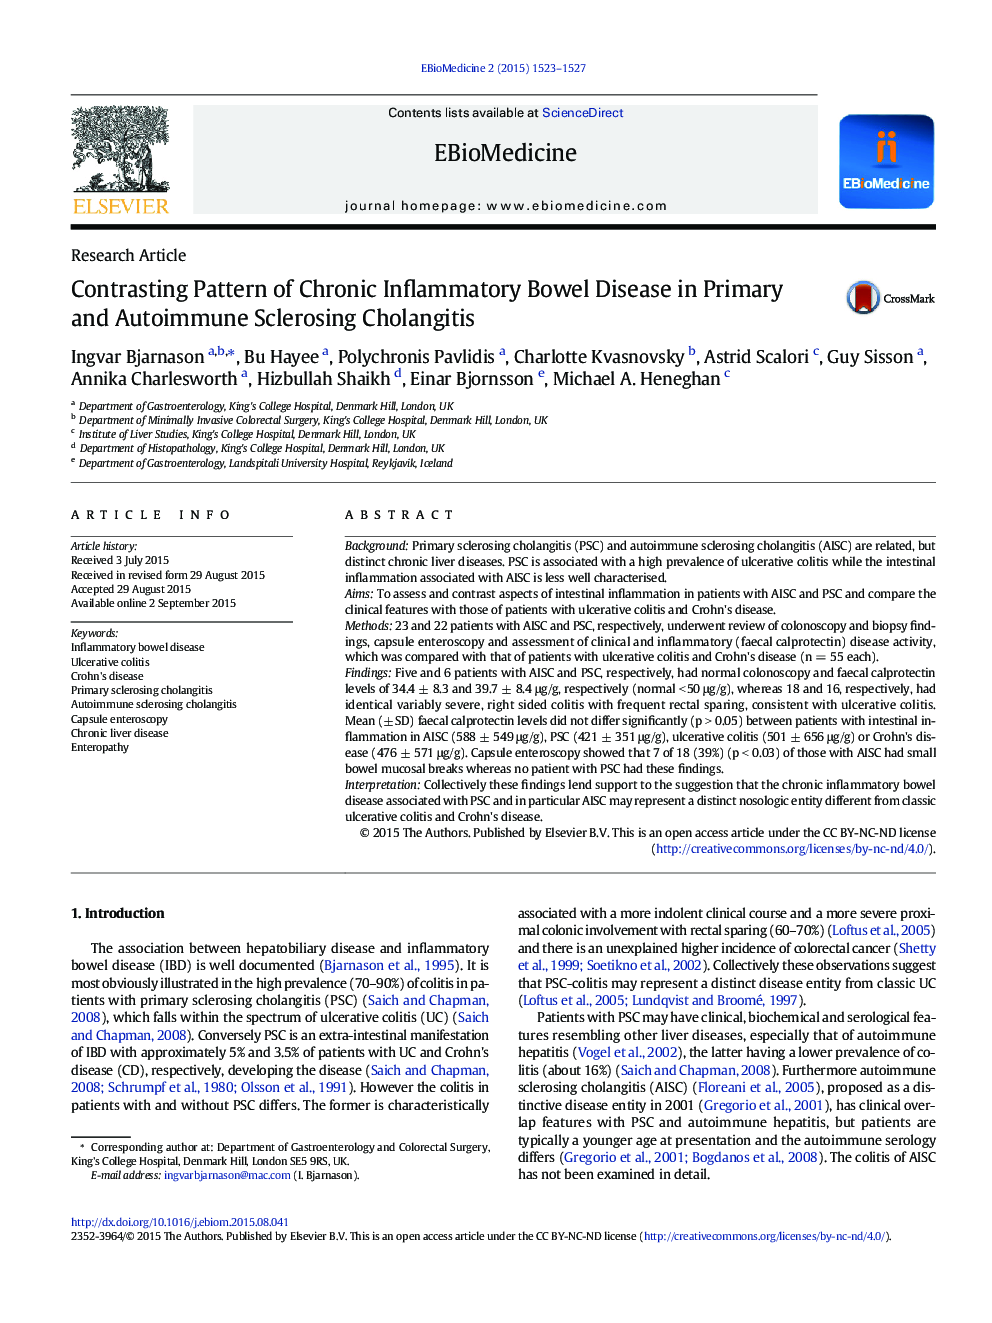 Contrasting Pattern of Chronic Inflammatory Bowel Disease in Primary and Autoimmune Sclerosing Cholangitis